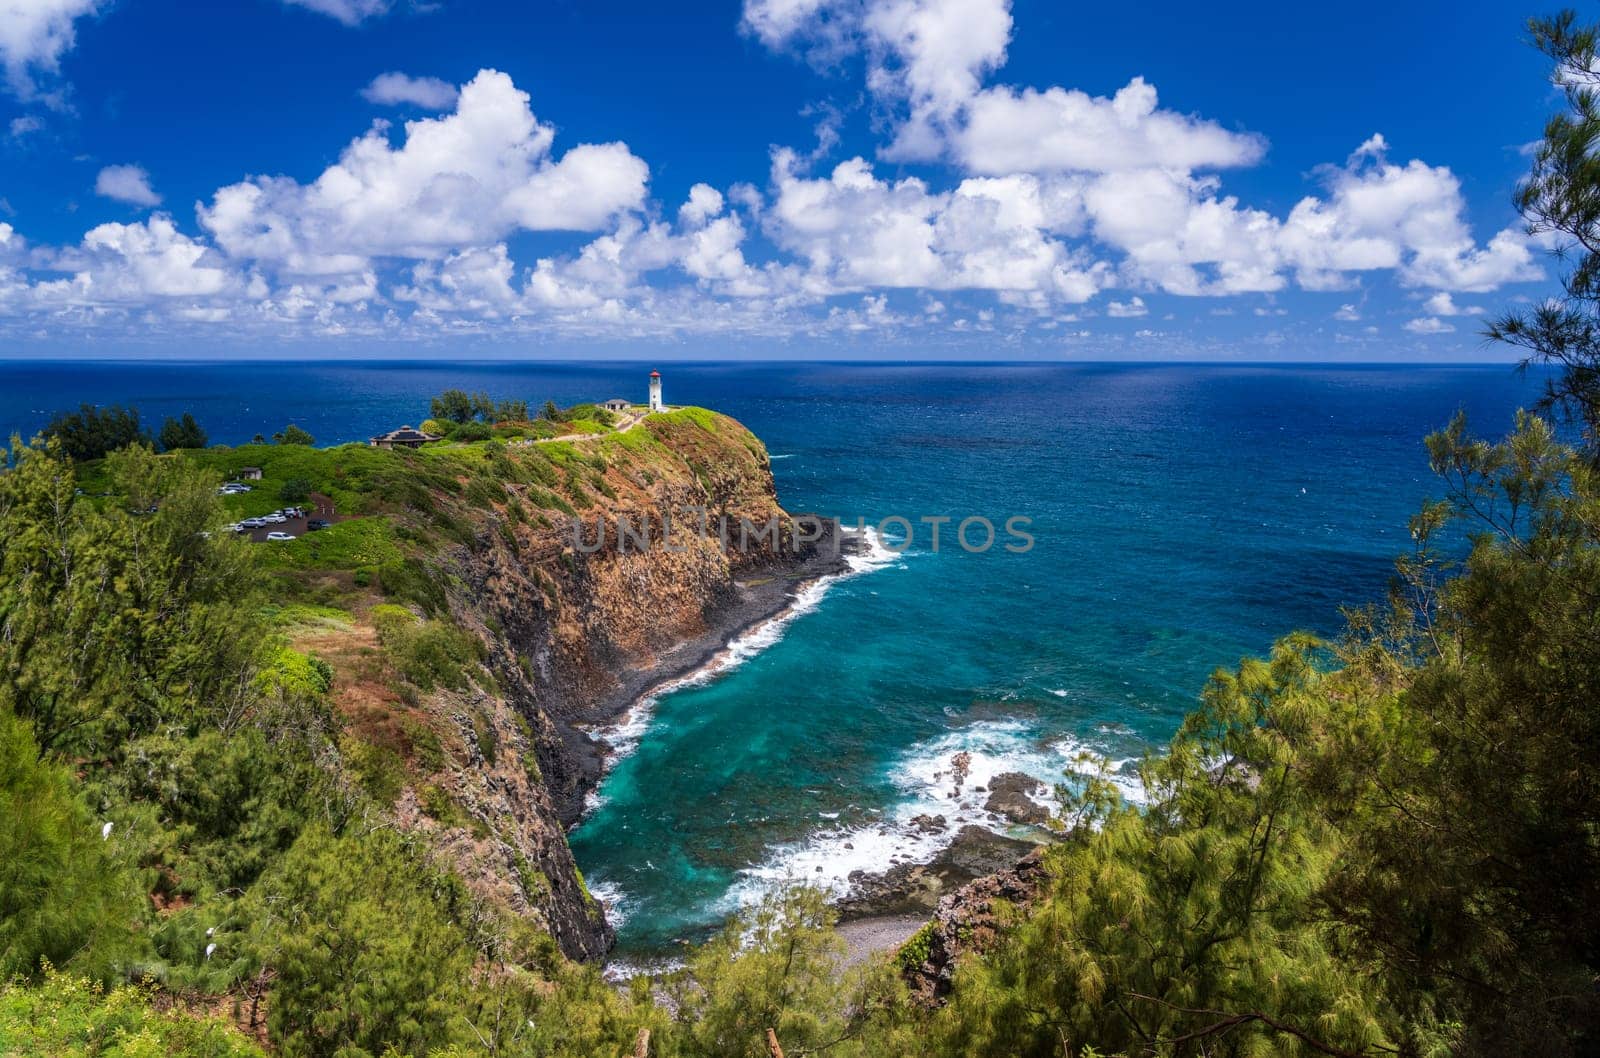 Kilauae Lighthouse on headland above turquoise bay on north coast of Kauai in Hawaii